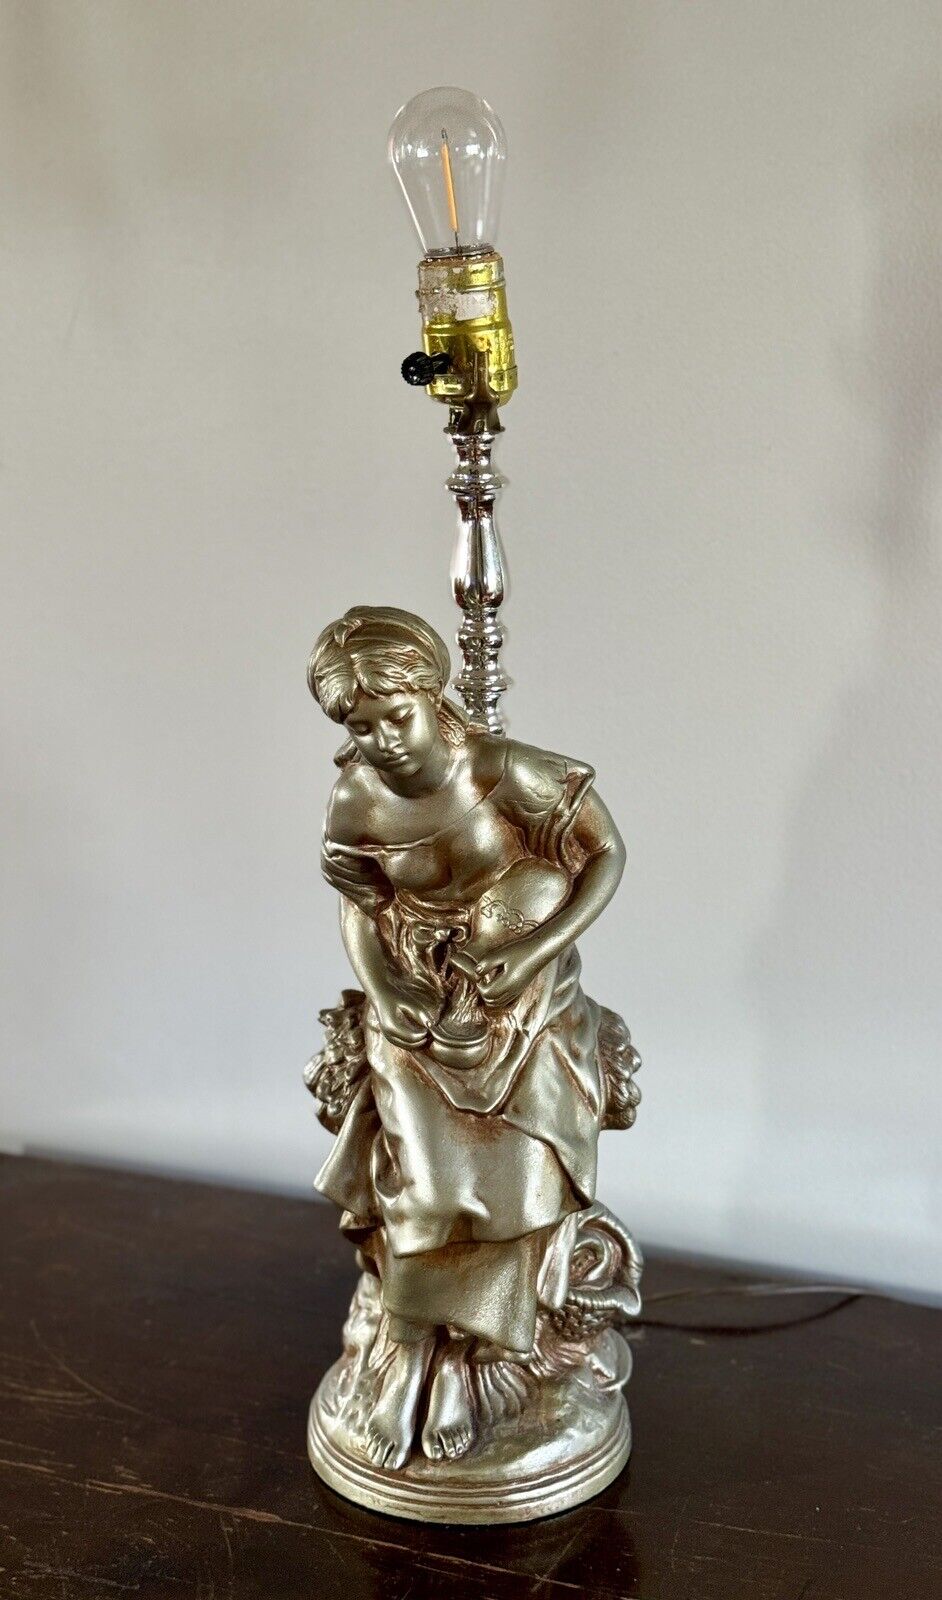 RELIC ART New York 1950’s MCM Lady Figurine Gold Tone Lamp 17” Vintage Chalkware